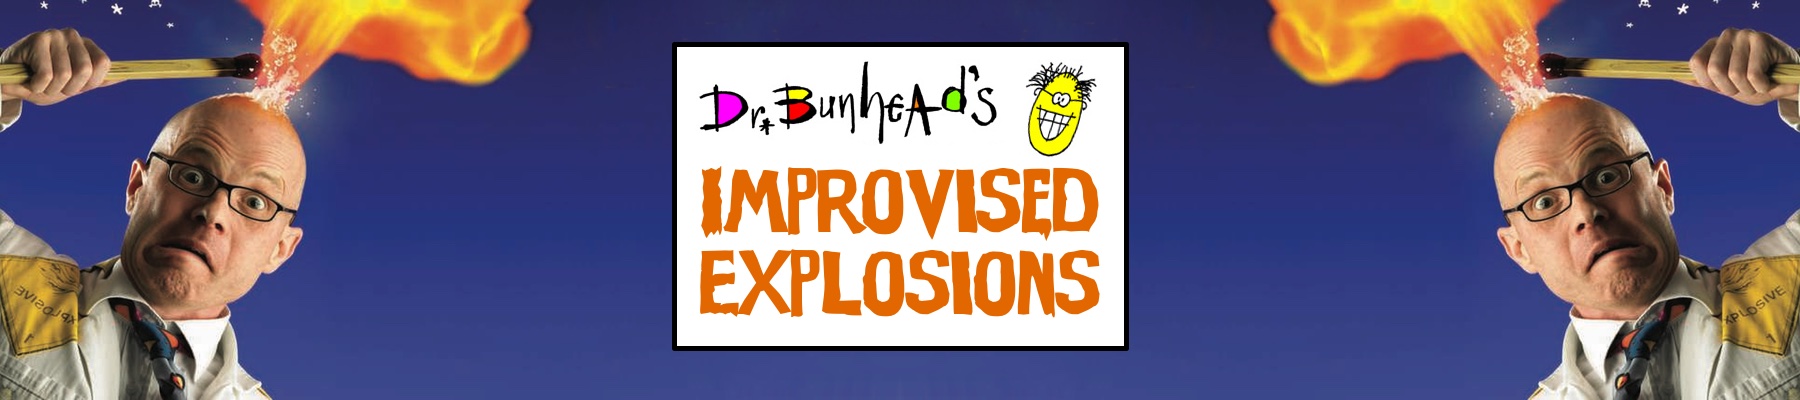 Dr Bunhead's Improvised Explosions